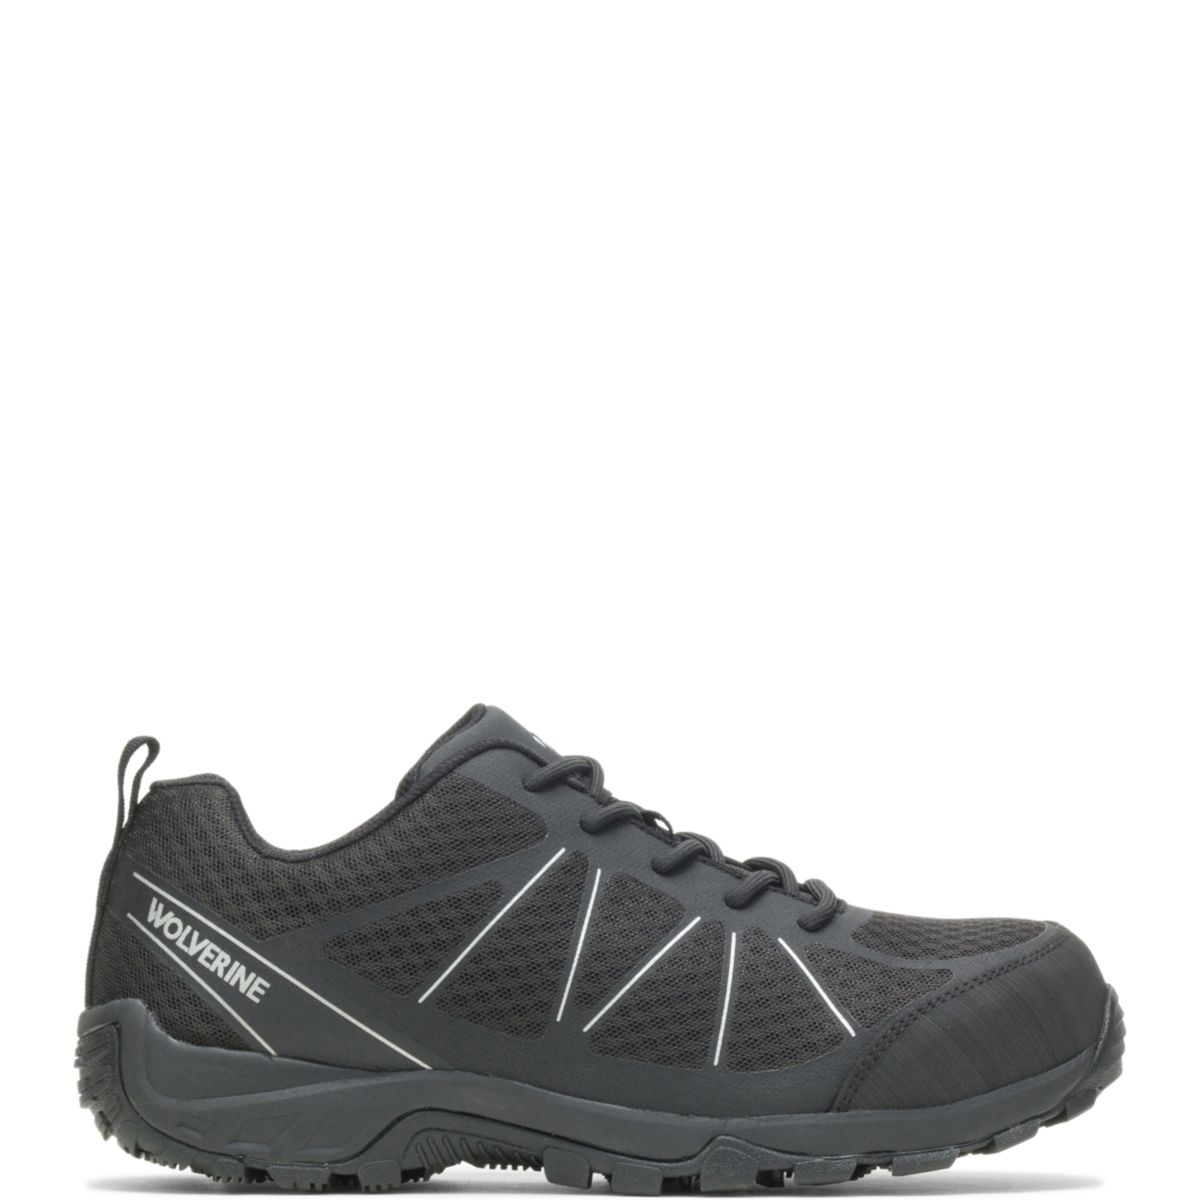 WOLVERINE Men's Amherst II CarbonMAXÂ® Composite Toe Work Shoe Black - W201147 BLACK - BLACK, 9.5